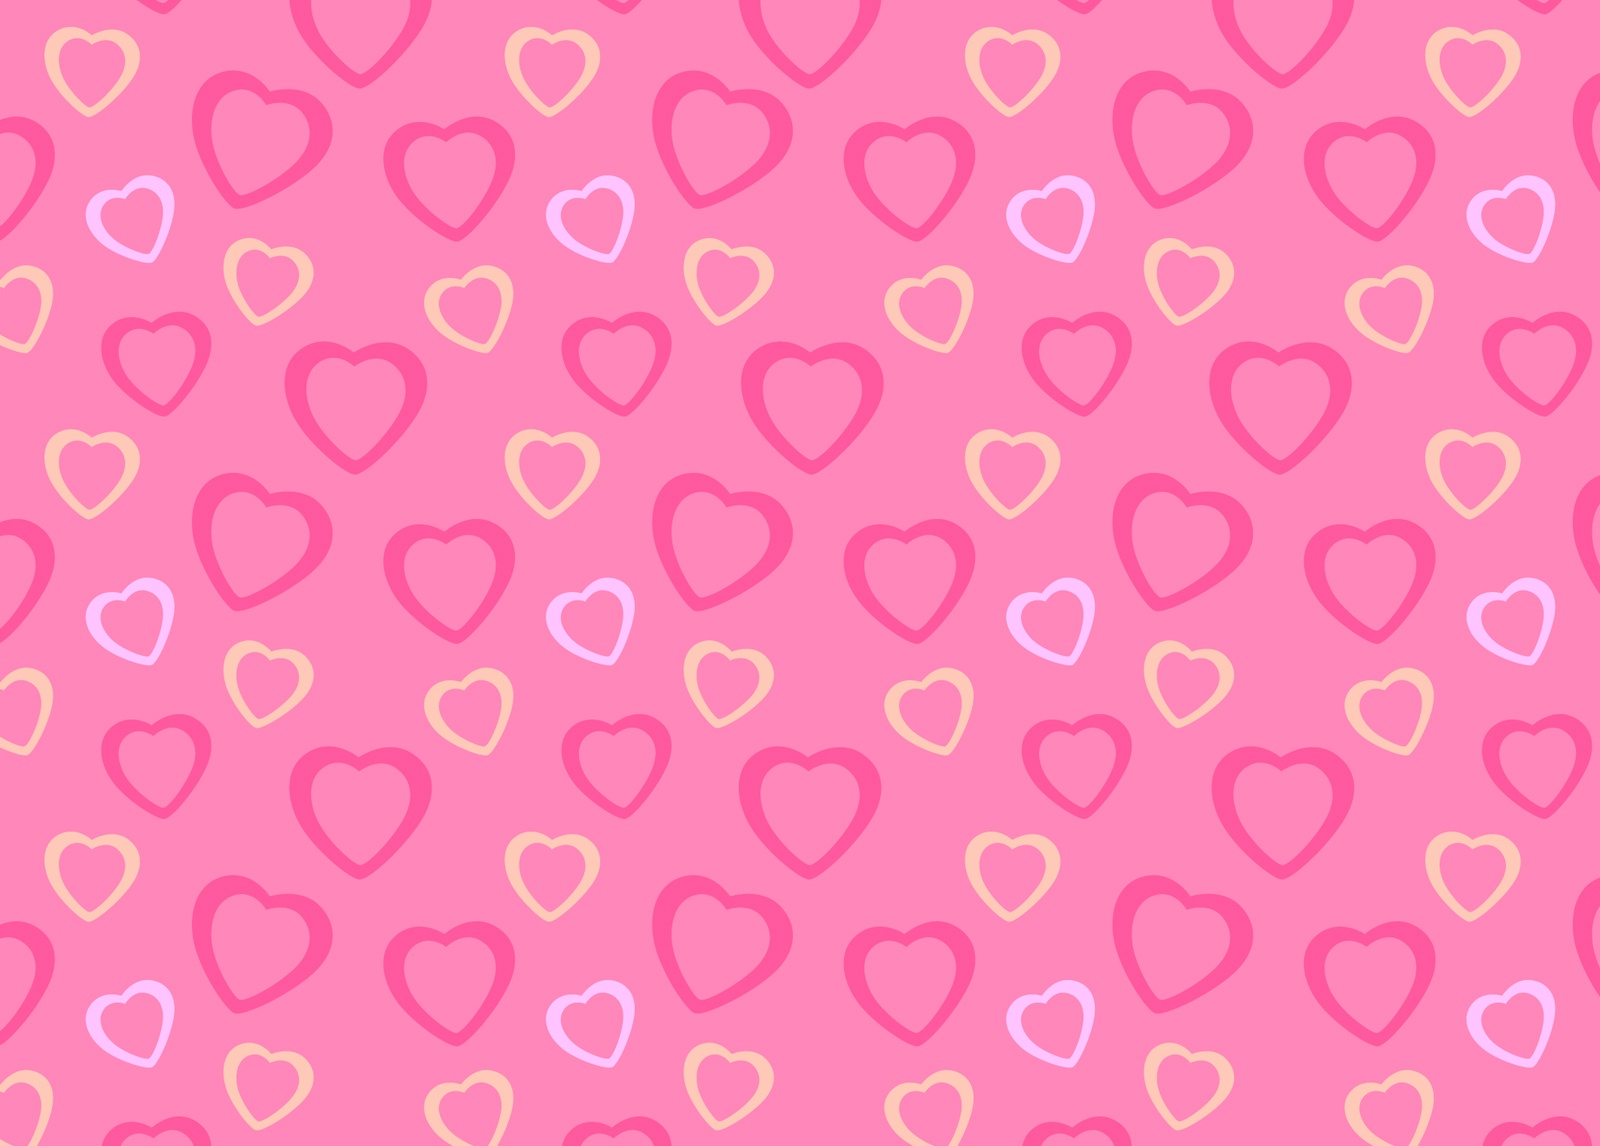 69+] Pink Heart Backgrounds - WallpaperSafari